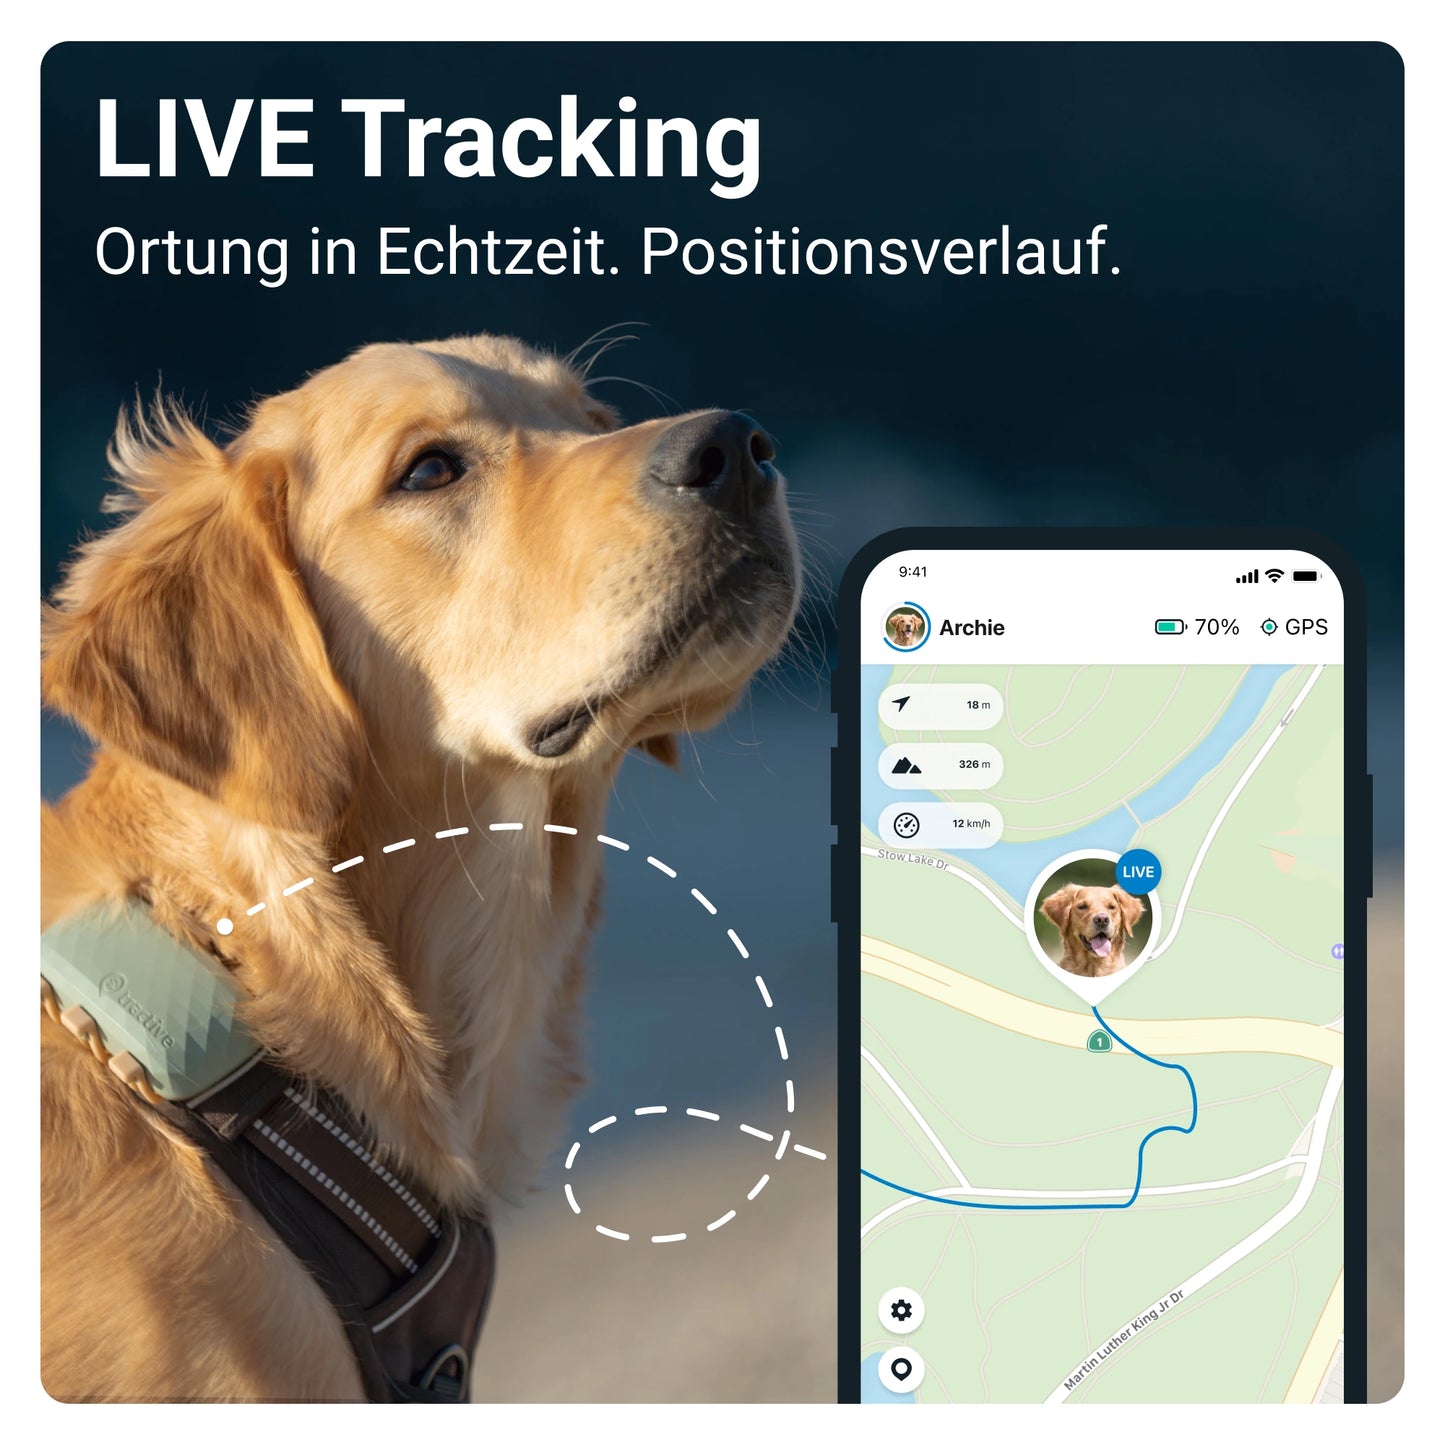 Tractive DOG XL - GPS Tracker mit längerer Akkulaufzeit